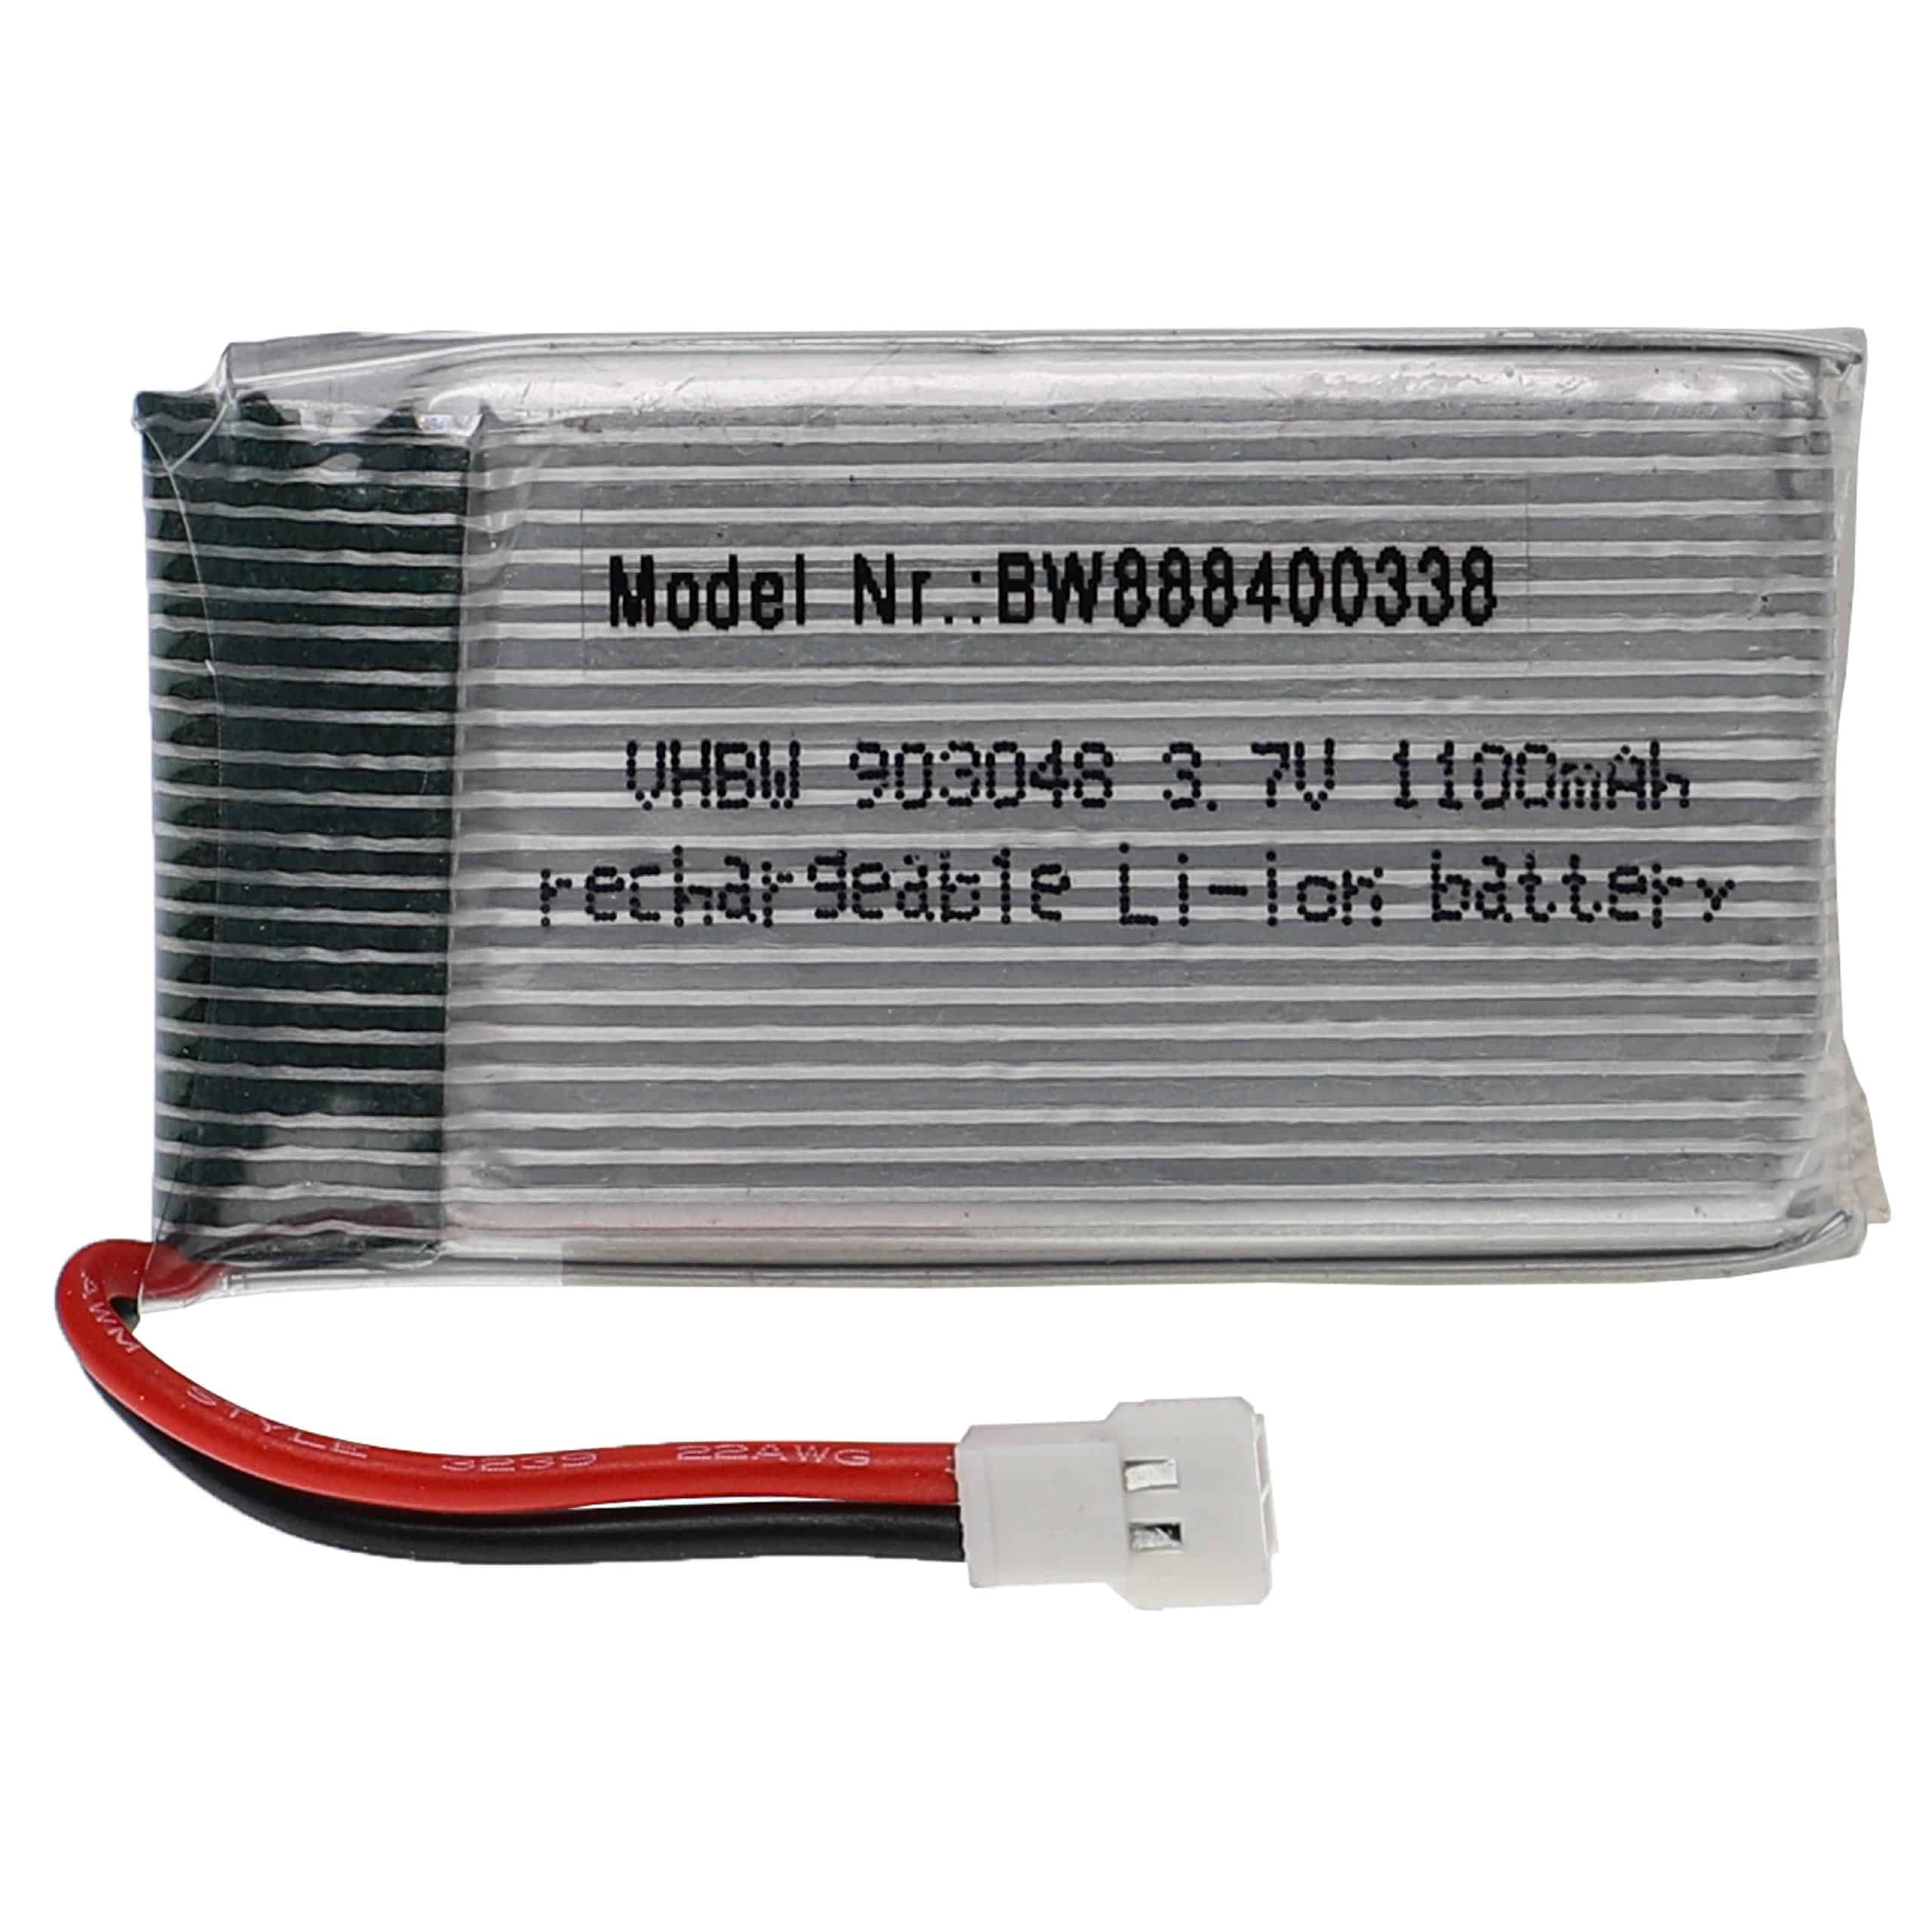 Model Making Device Replacement Battery - 1100mAh 3.7V Li-polymer, XH 2.54 2P